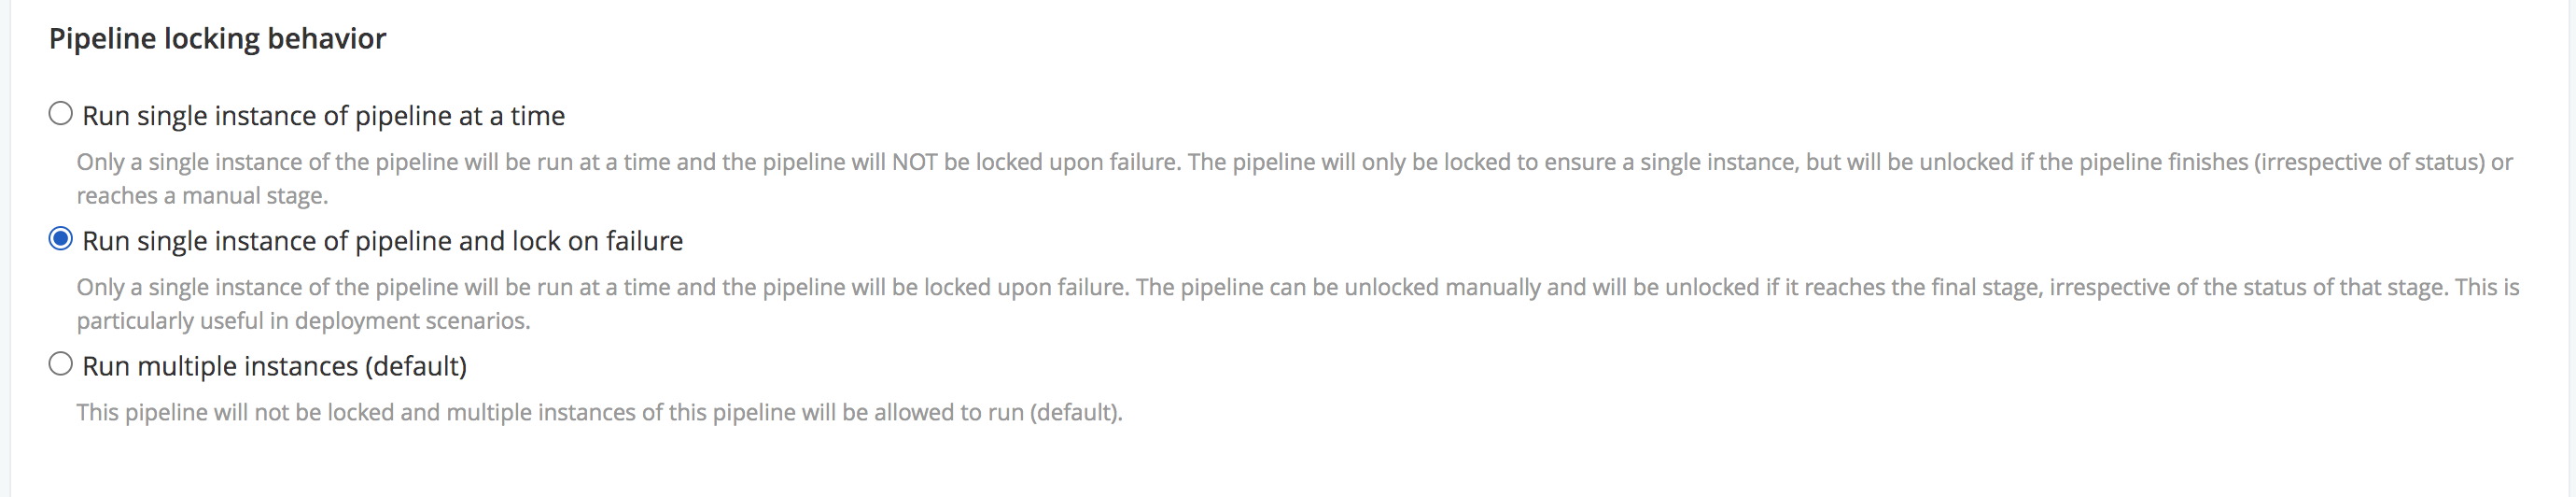 Pipeline locking behavior - Lock on failure